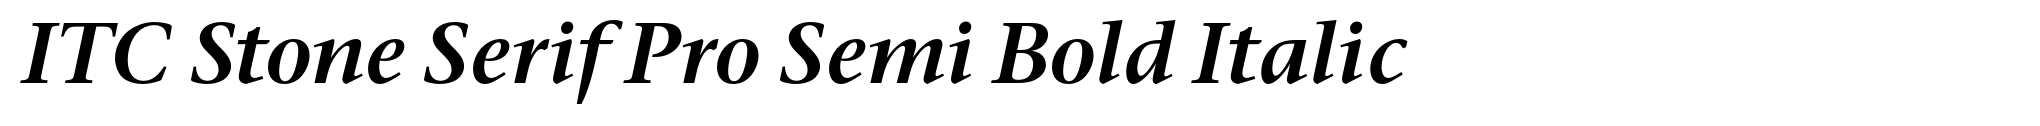 ITC Stone Serif Pro Semi Bold Italic image